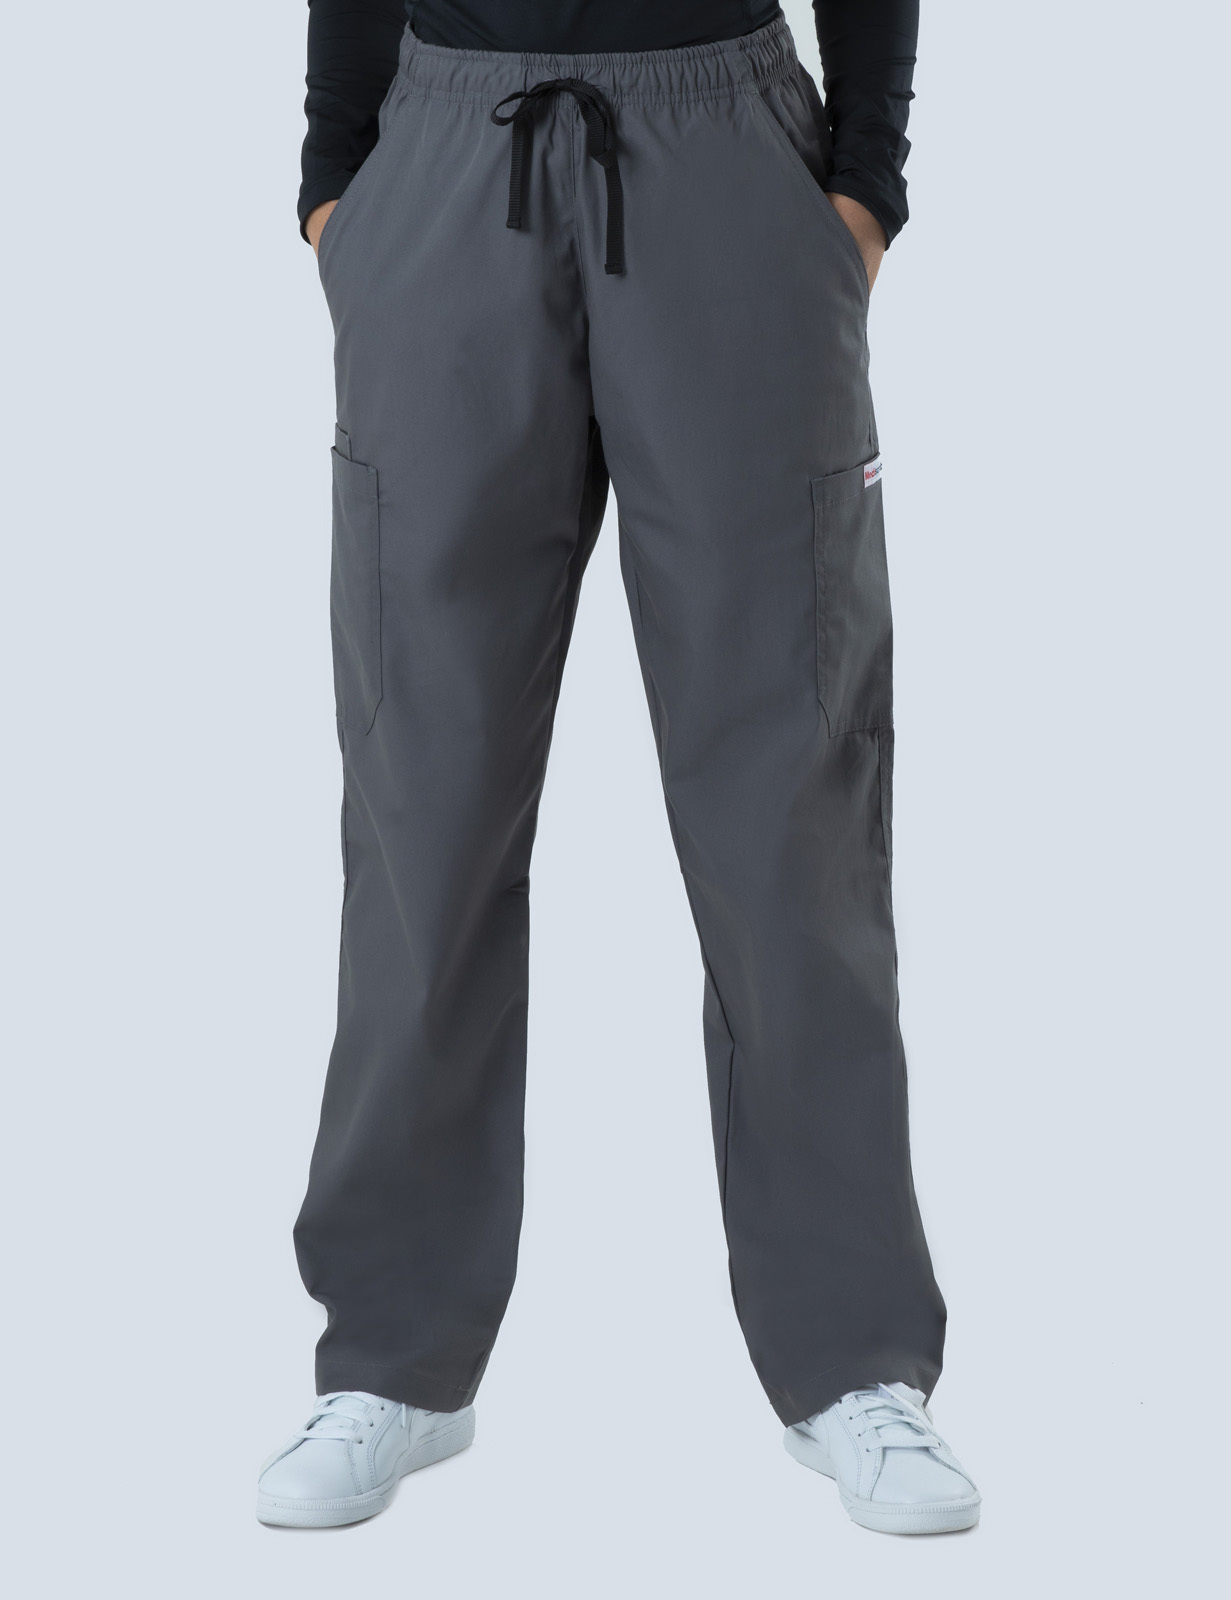 Cargo Pants - Goulburn Valley Health-MI (pants only) ( Steel Grey Cargos)